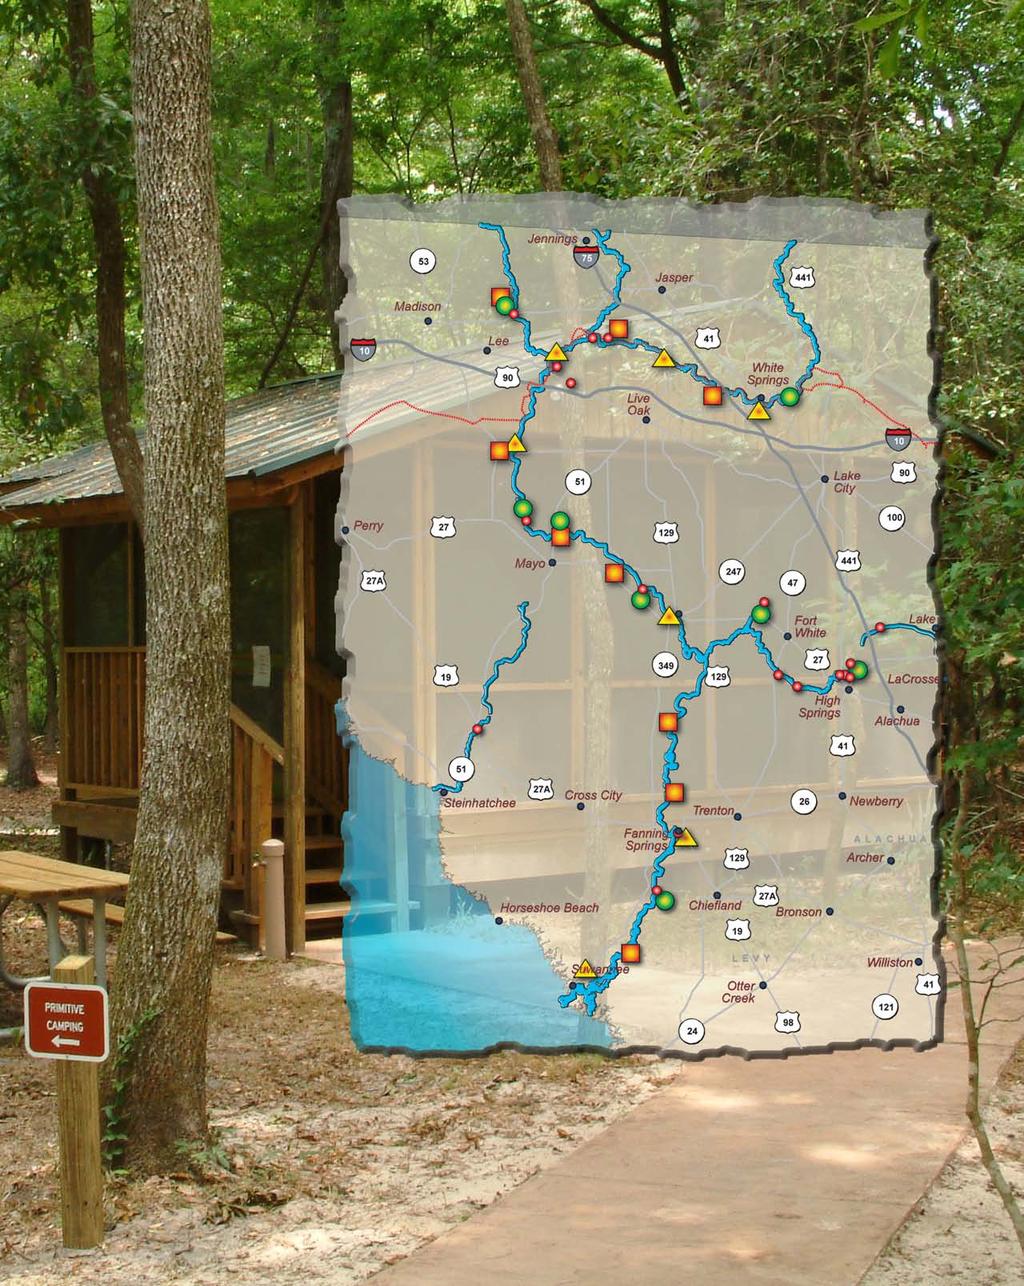 Suwannee River Wilderness Trail Suwannee River Wilderness Trail is a system of